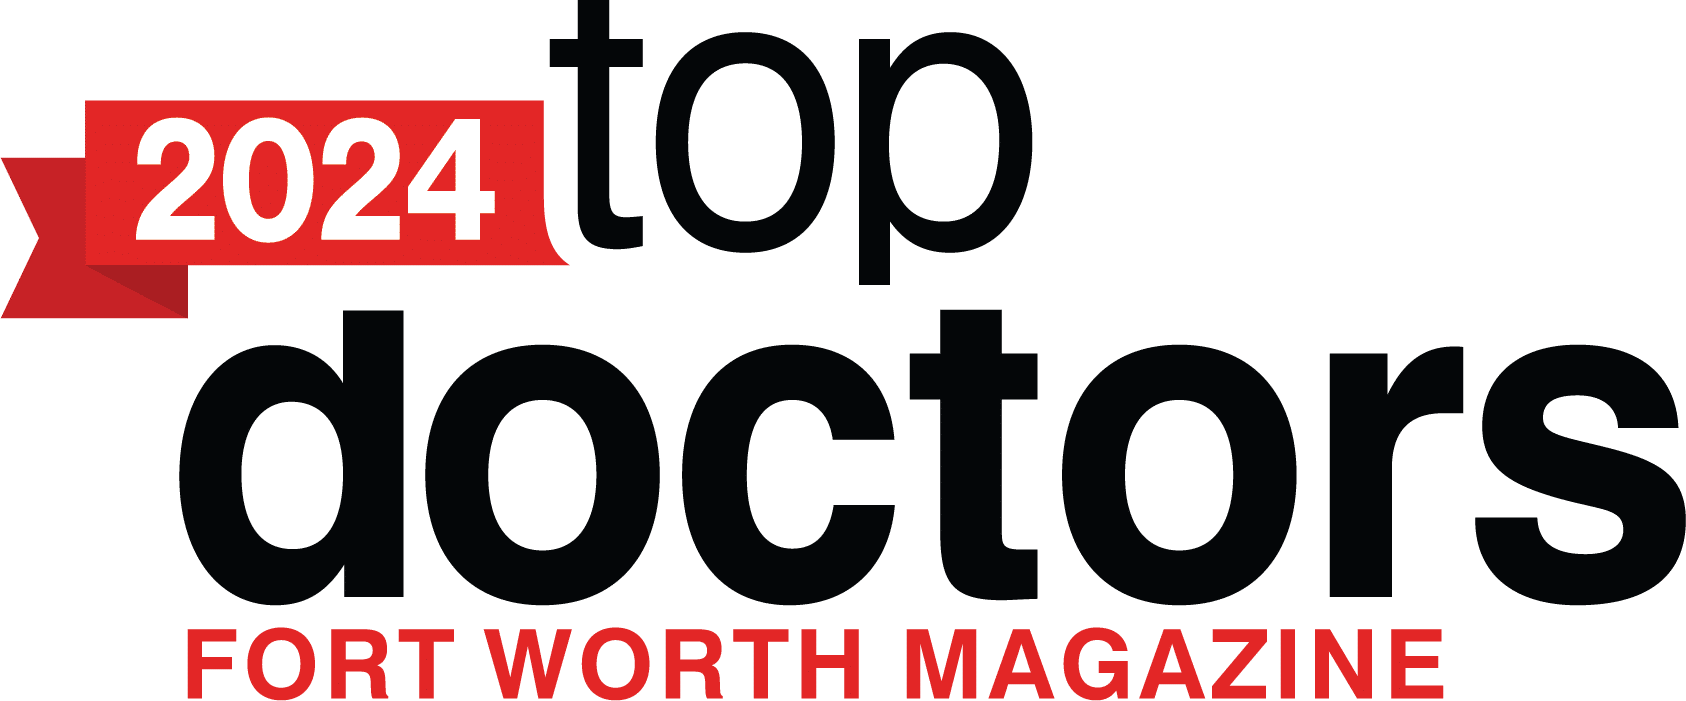 Fort Worth Magazine 2024 Top Doctors logo